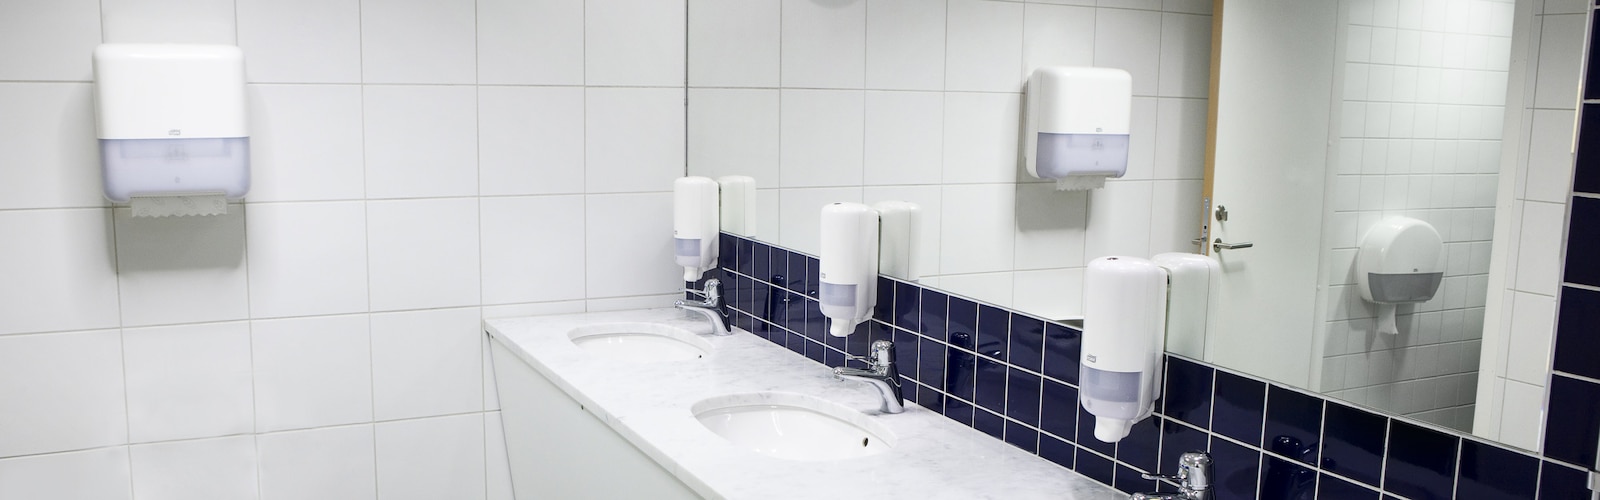 Commercial bathroom accessories dispensers | dispenser | Tork US